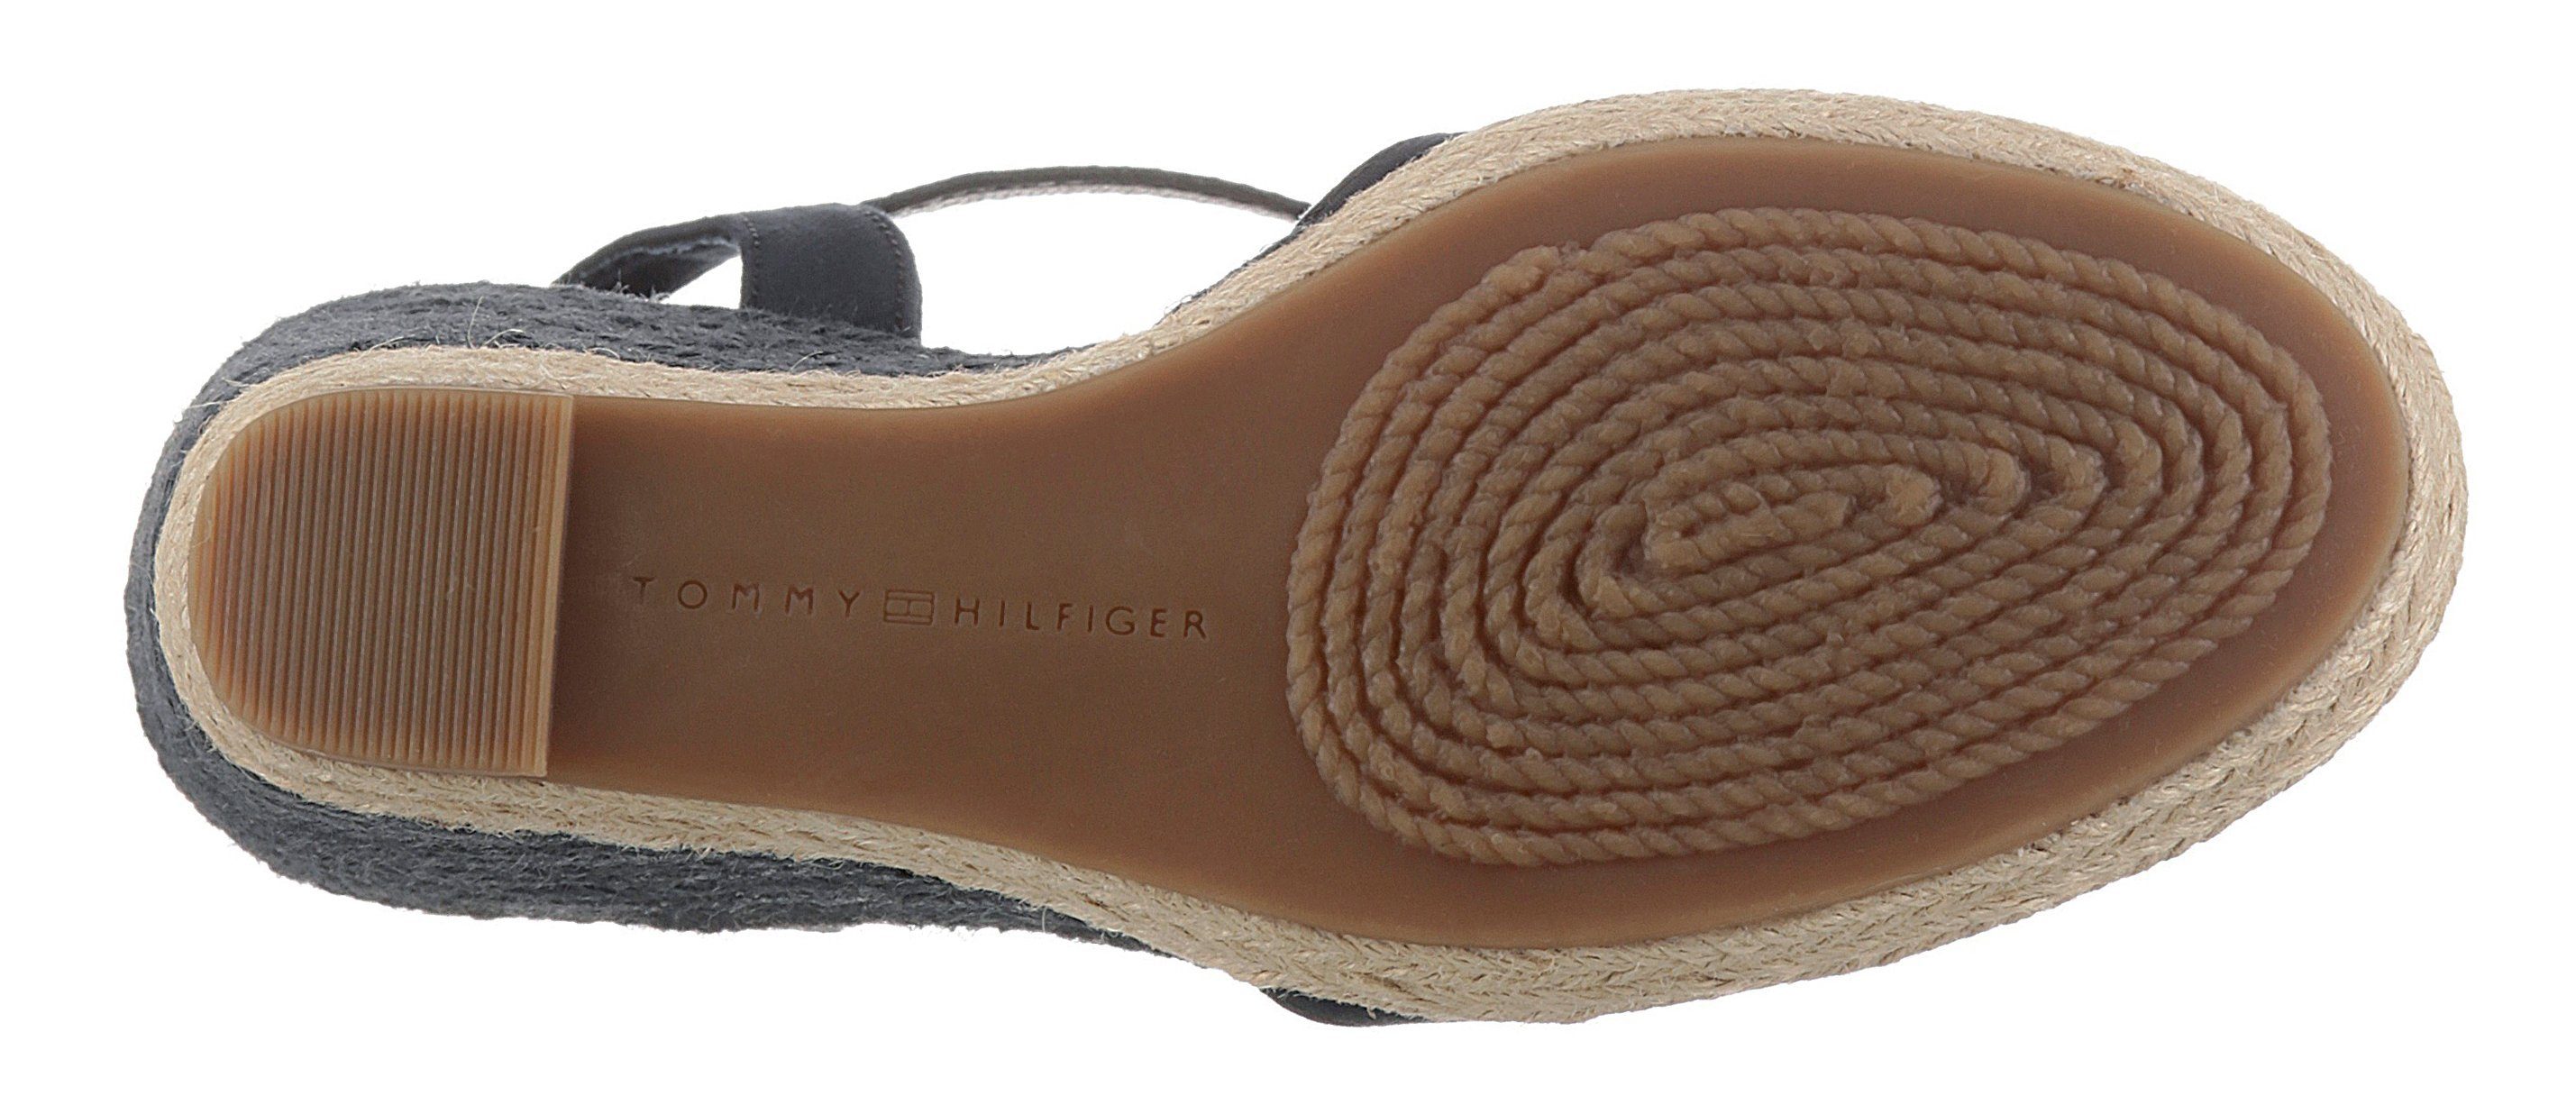 Keilabsatz WEDGE Desert-Sky Tommy Hilfiger CLOSED Sandalette bezogenem HIGH TOE BASIC mit